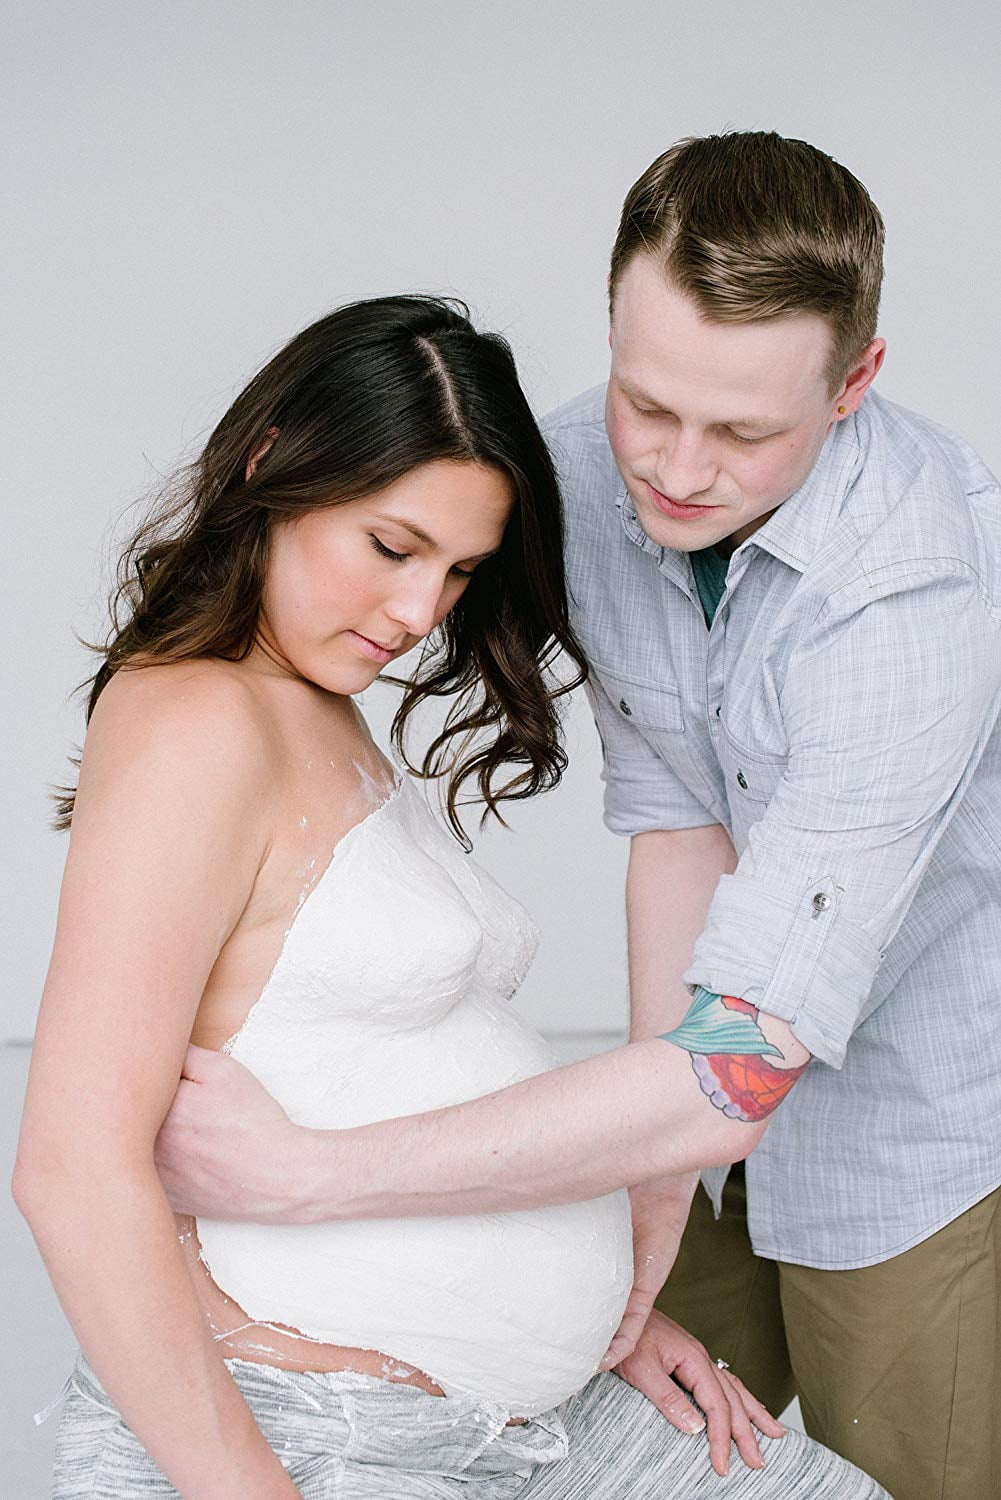 Pearhead Belly Casting Pregnancy Mold Kit – Sneak A Peek Boutique